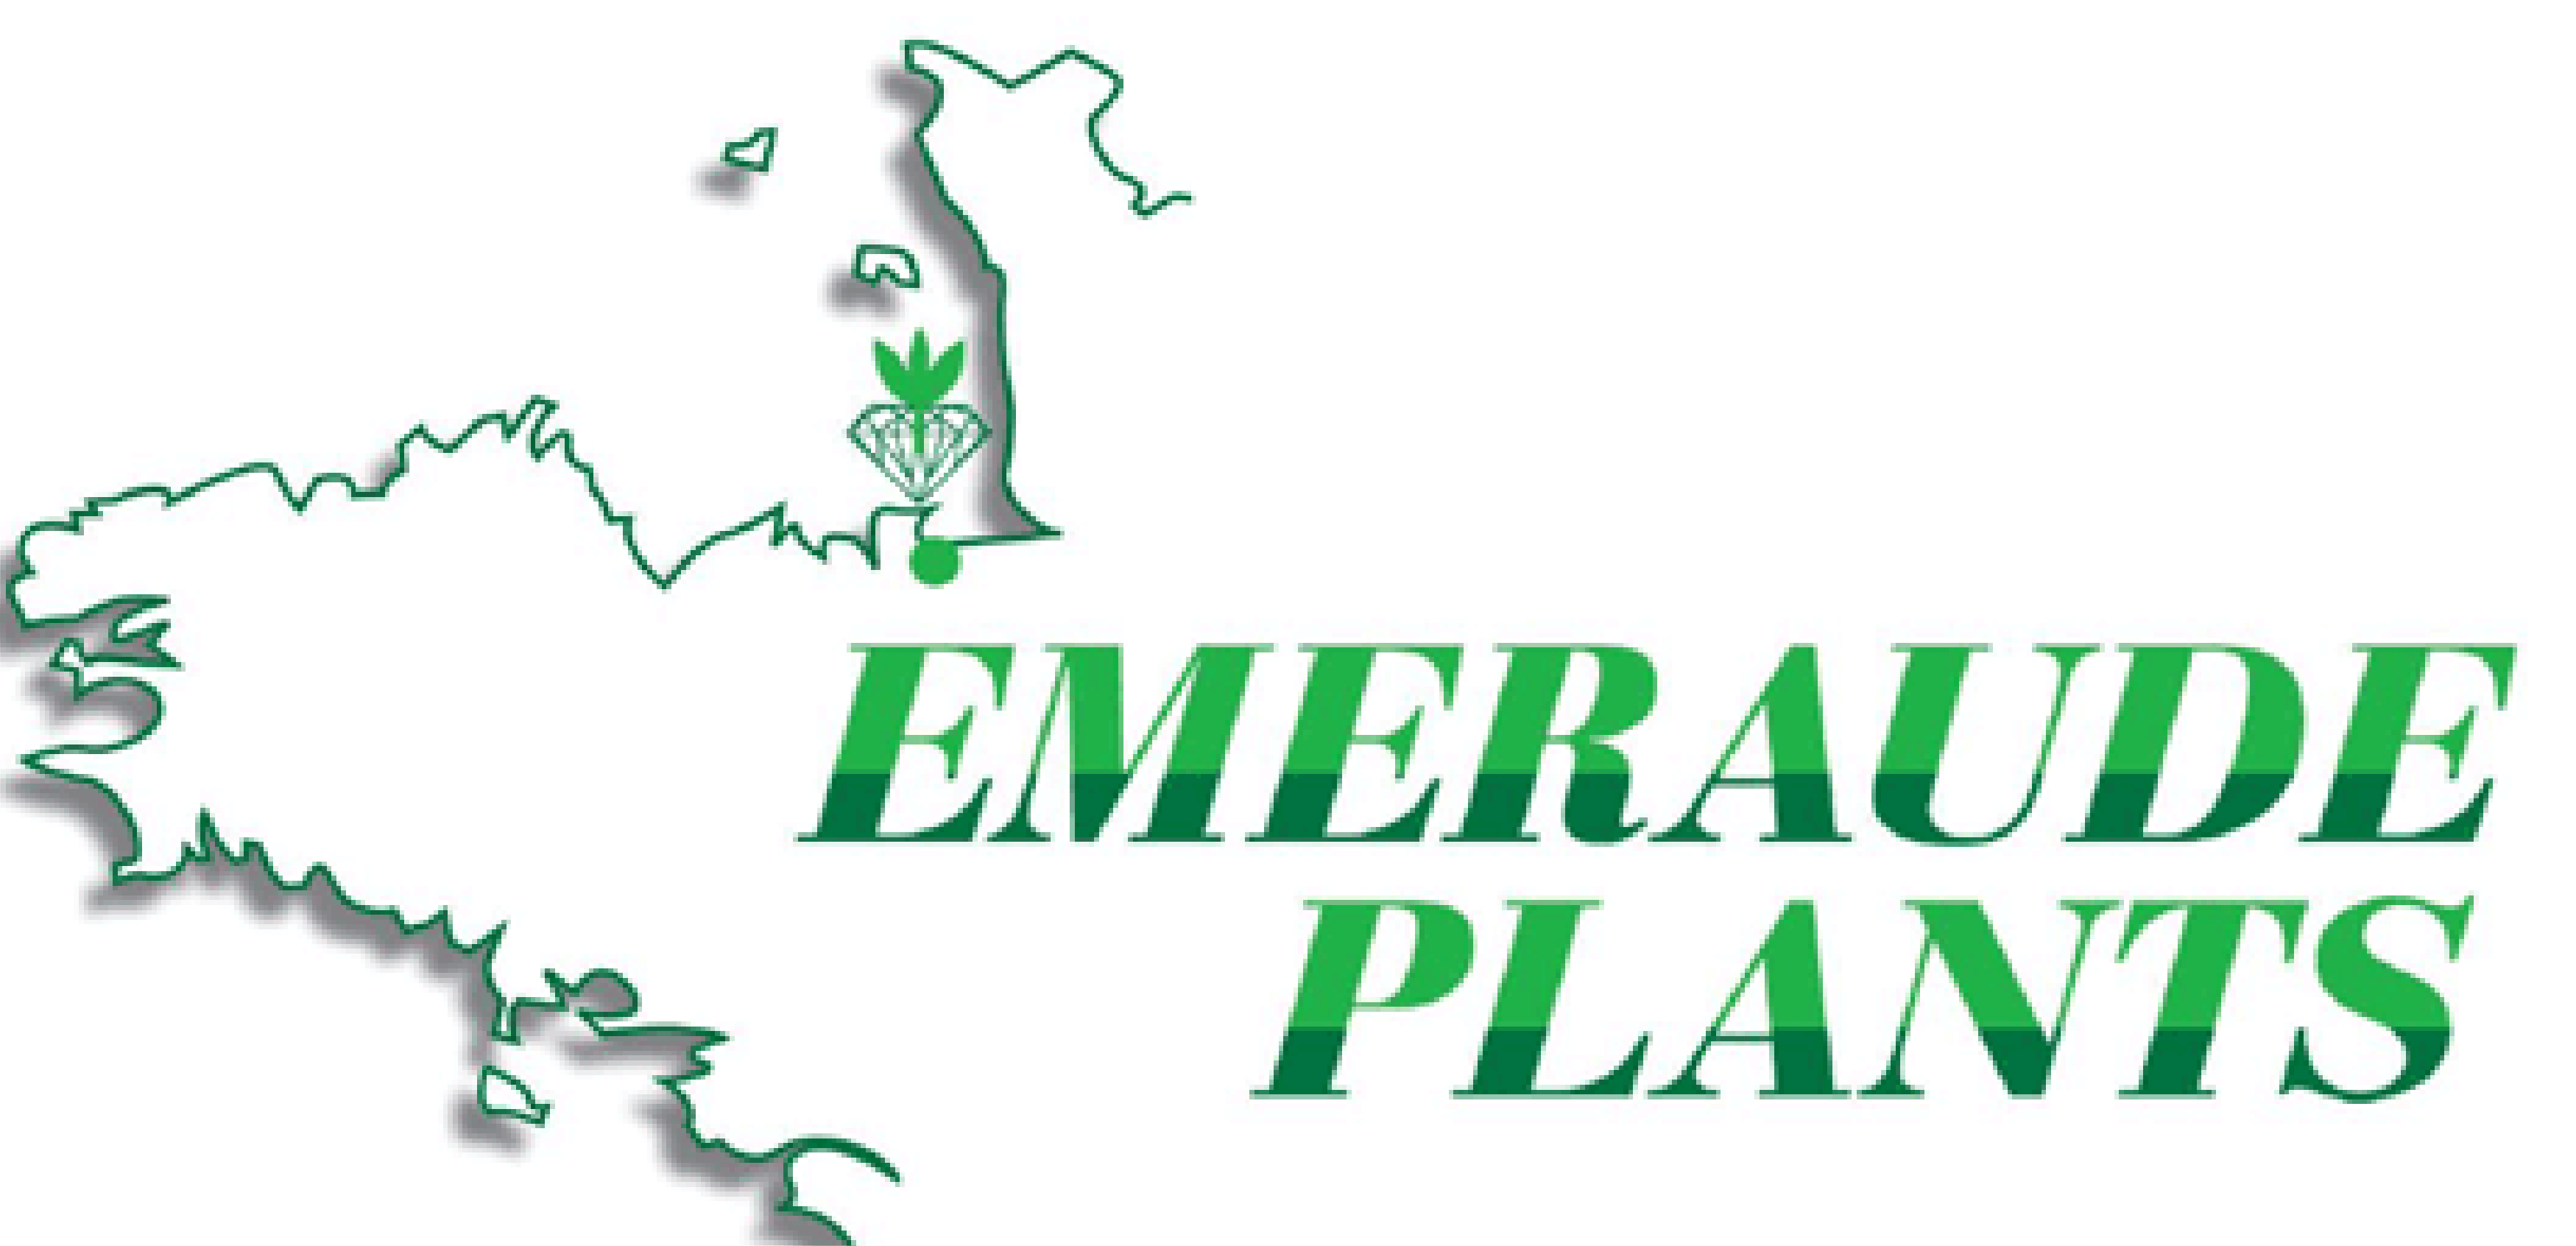 Logo Emeraude Plants